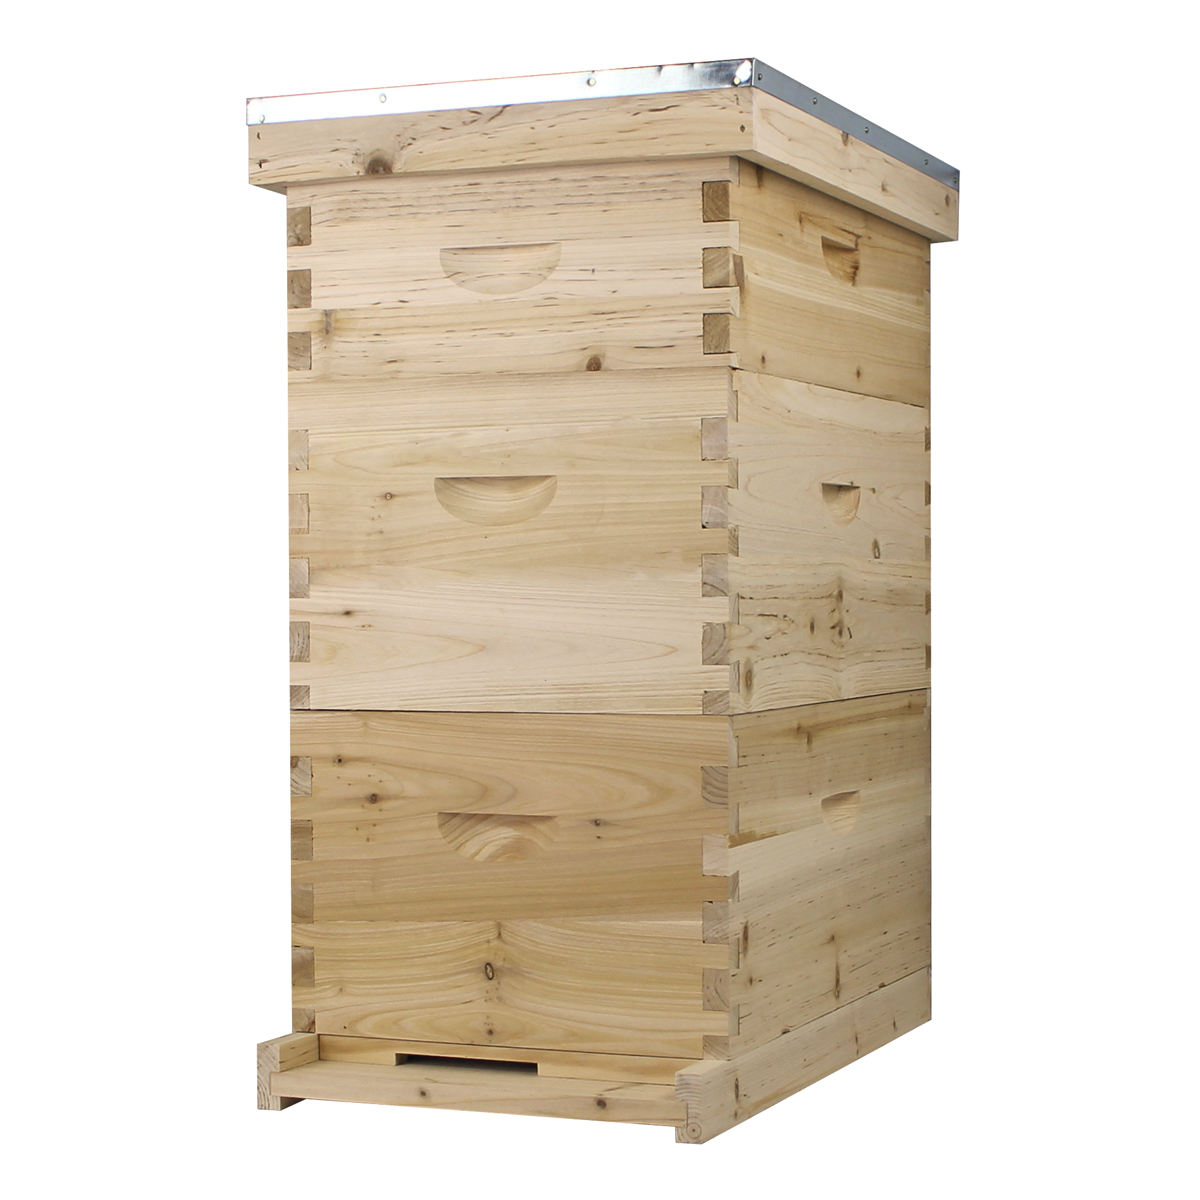 NuBee 8 Frame Beehive With 2 Deep Bee Boxes & 1 Medium Bee Box